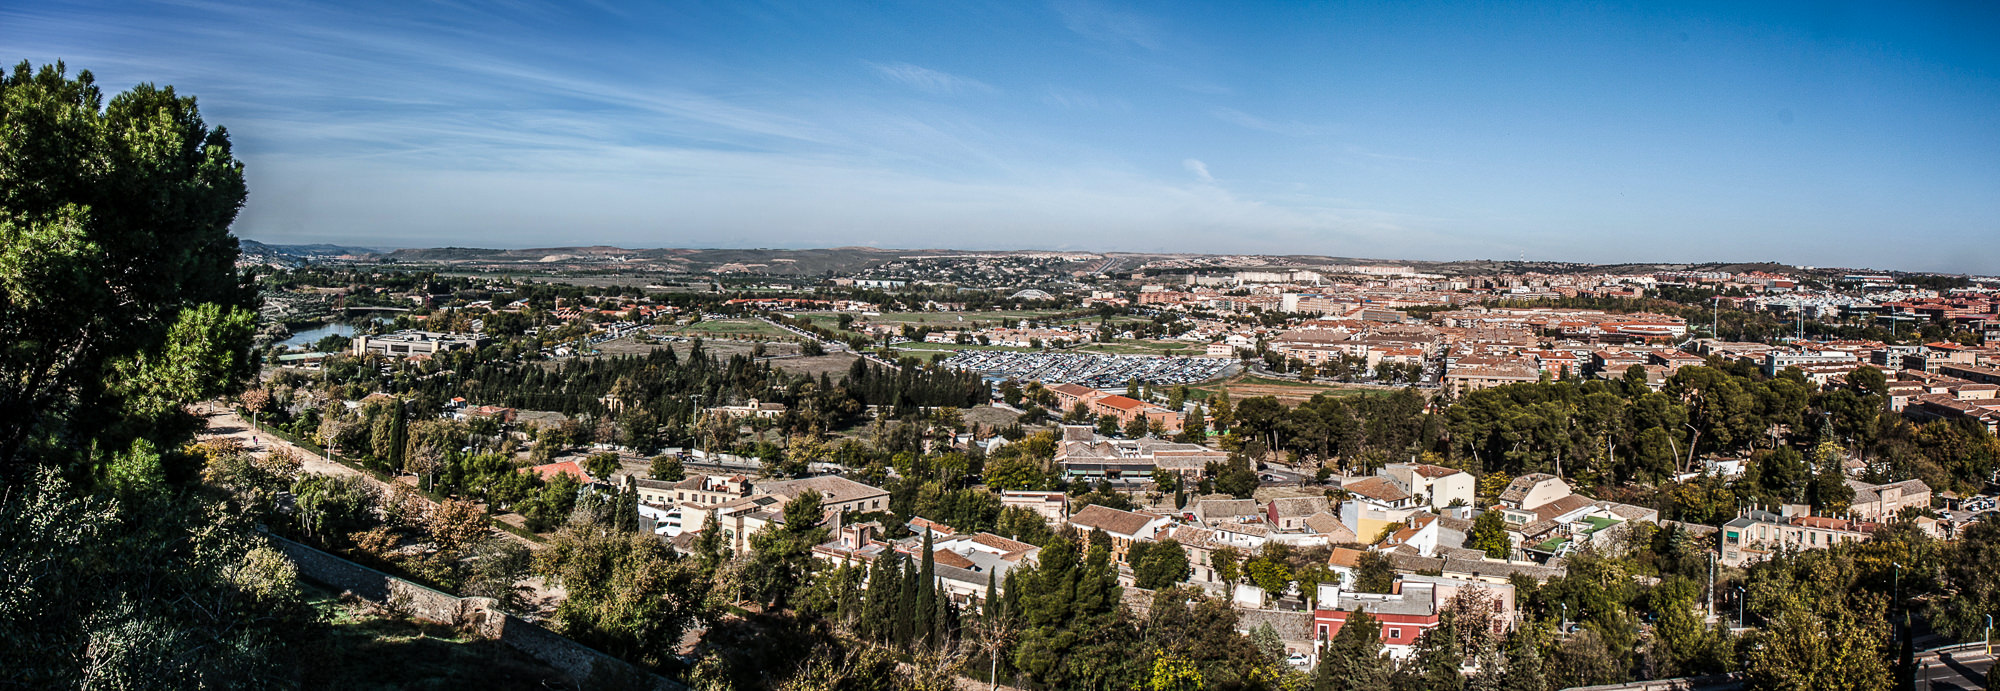 Spain 2014 Toledo 1